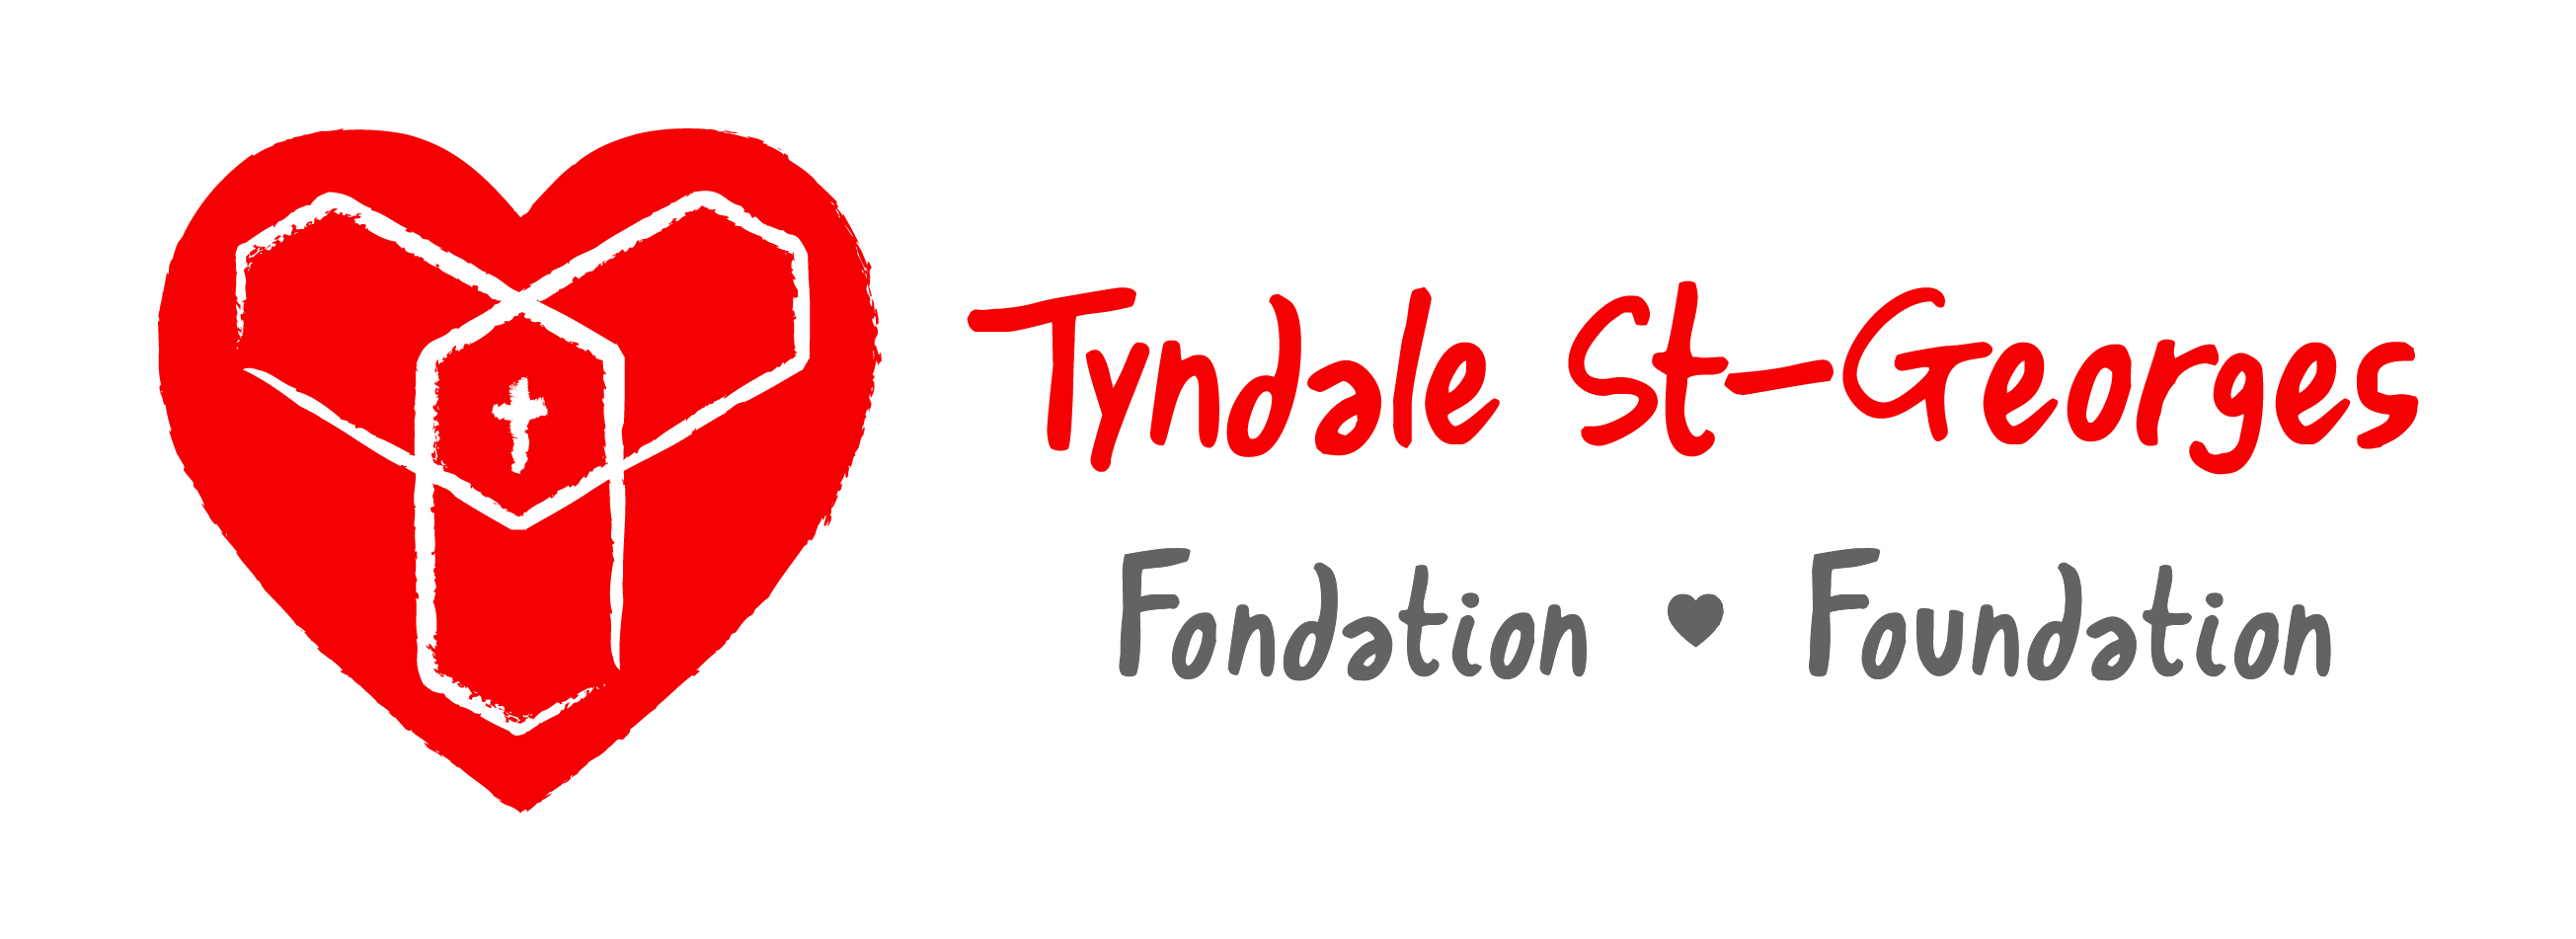 Tyndale St-Georges Community Centre Foundation